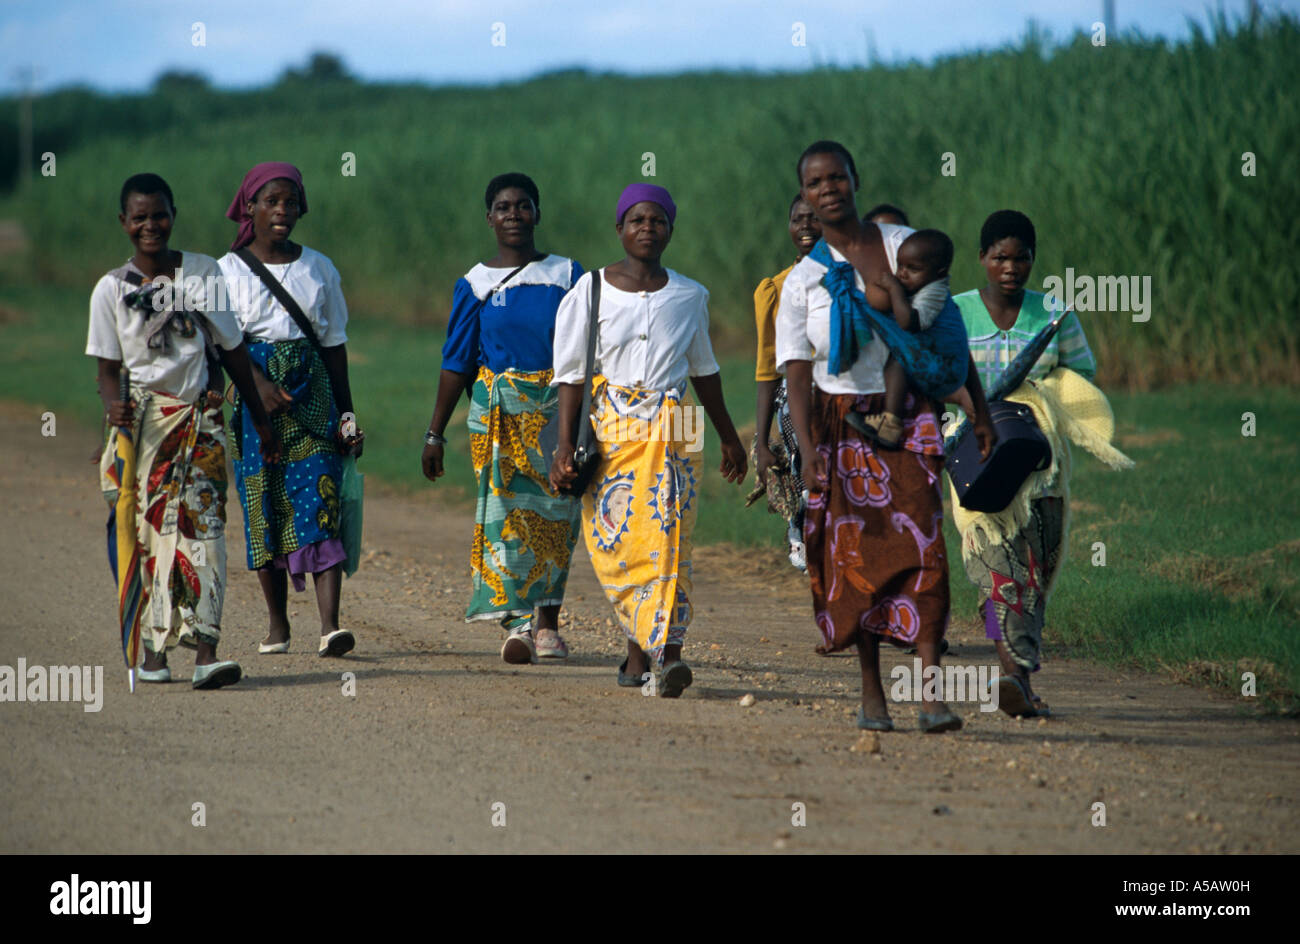 Group of women walking on rural road, Malawi, Africa Stock Photo